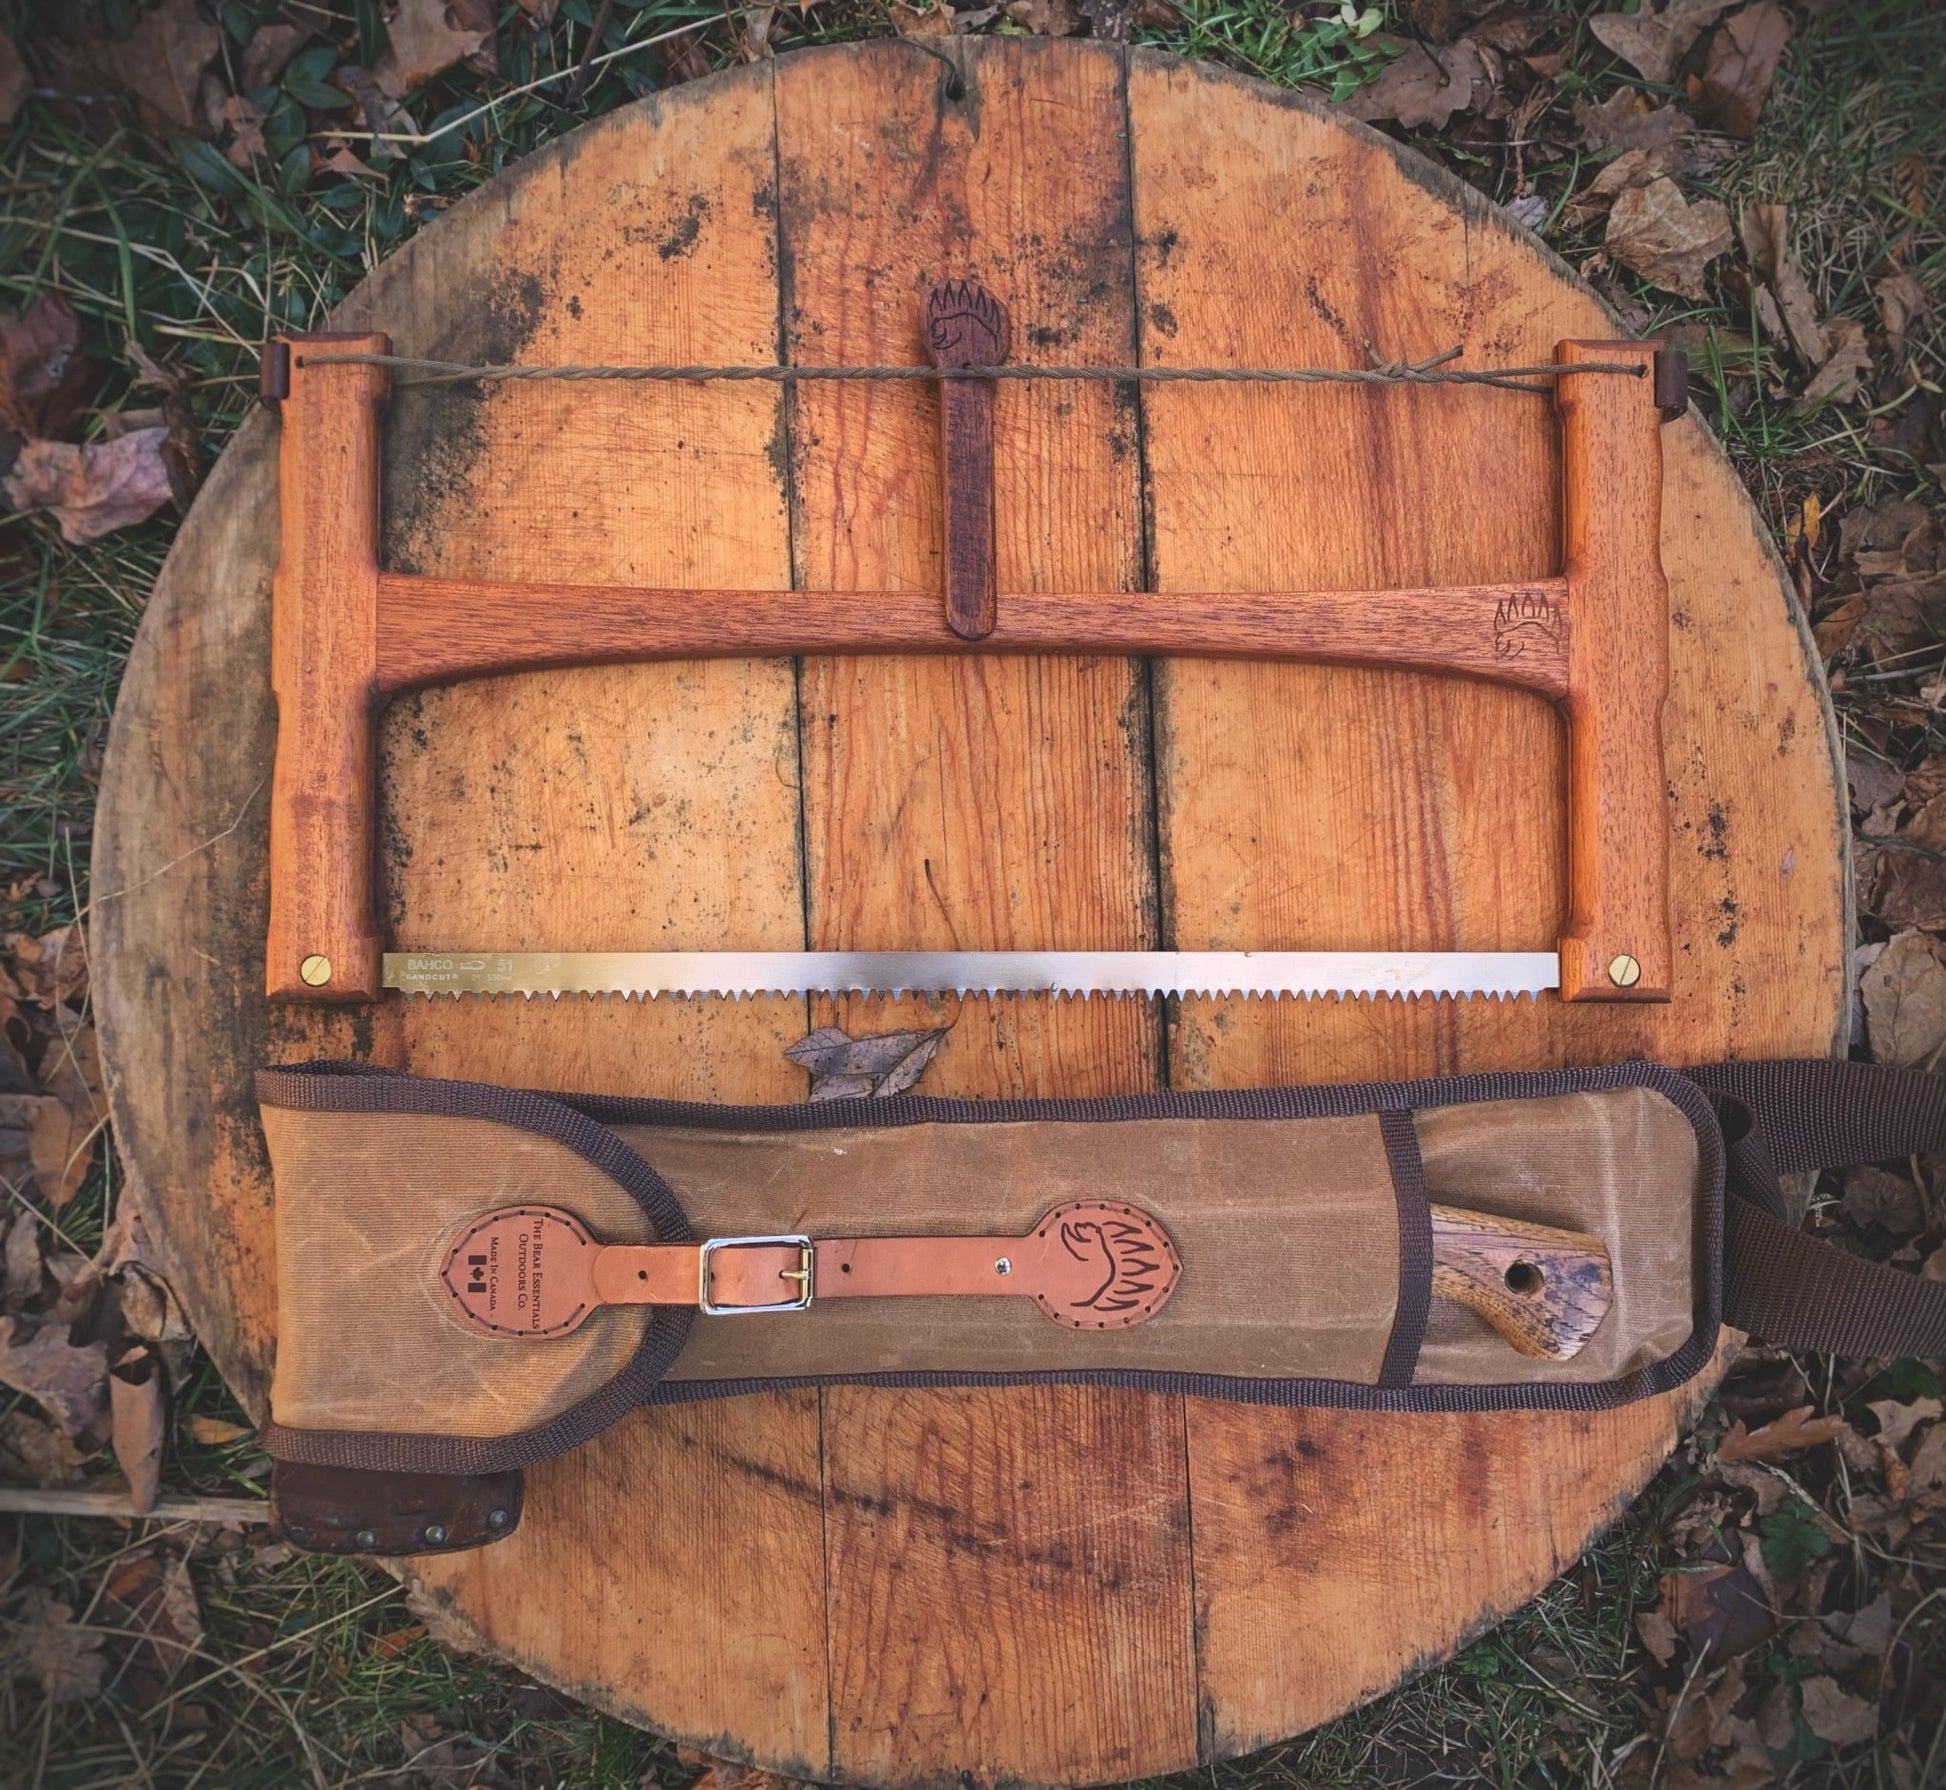 The Original Bucksaw - The Bear Essentials Outdoors Co., Saw N' Axe Sling [Olive Drab], Standard Bucksaw Engraving,